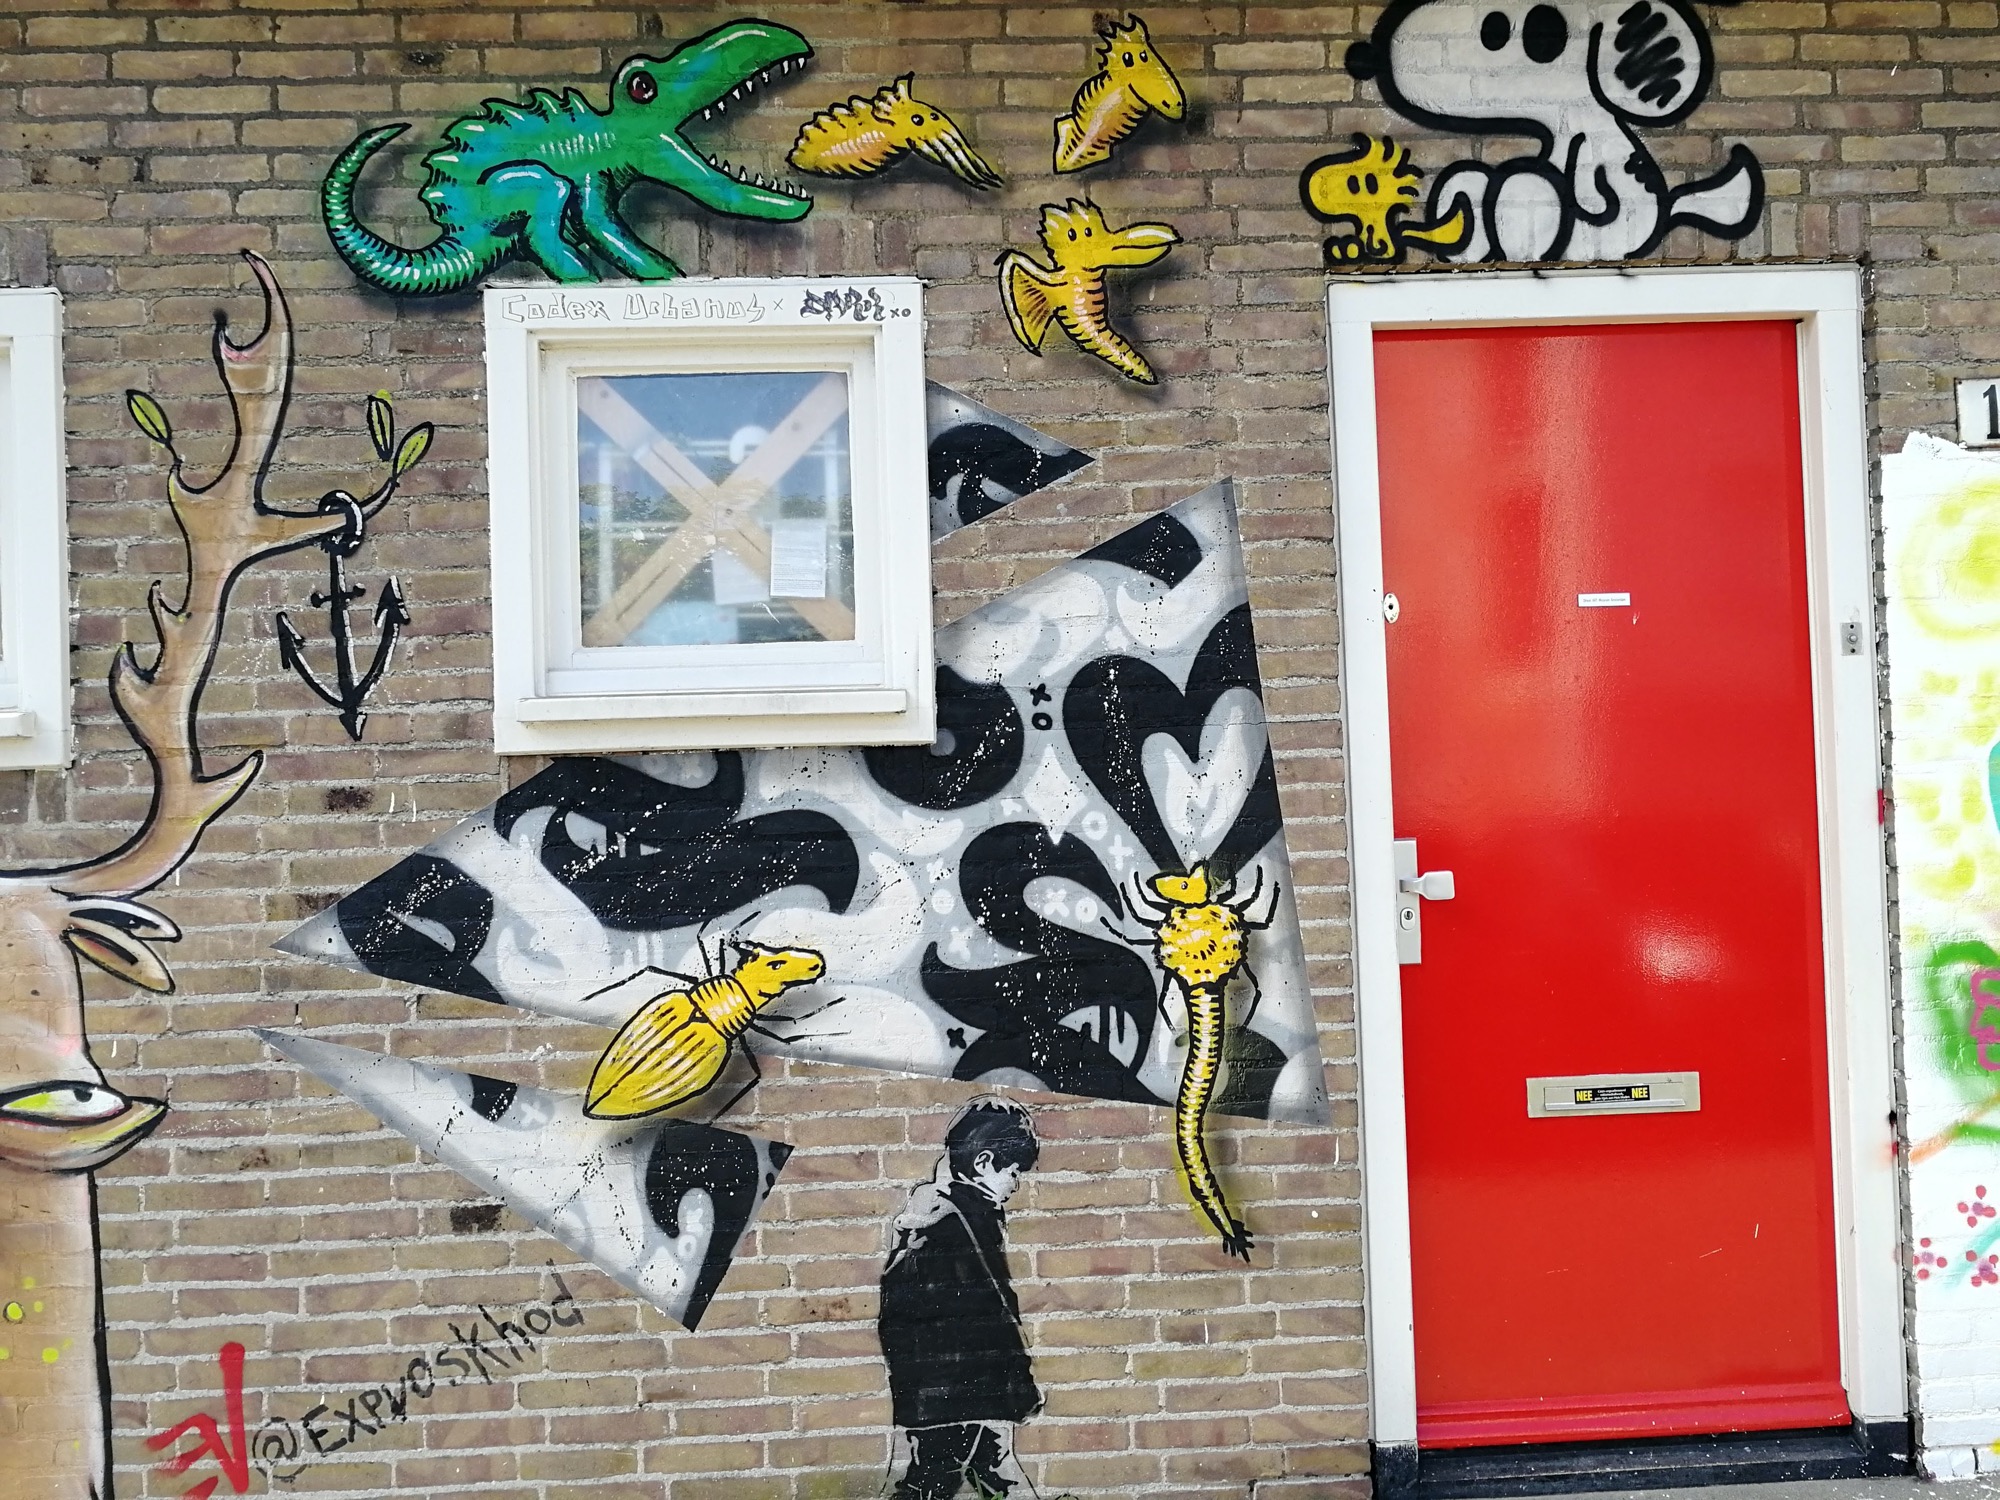 Graffiti 1765  captured by Rabot in Amsterdam Netherlands